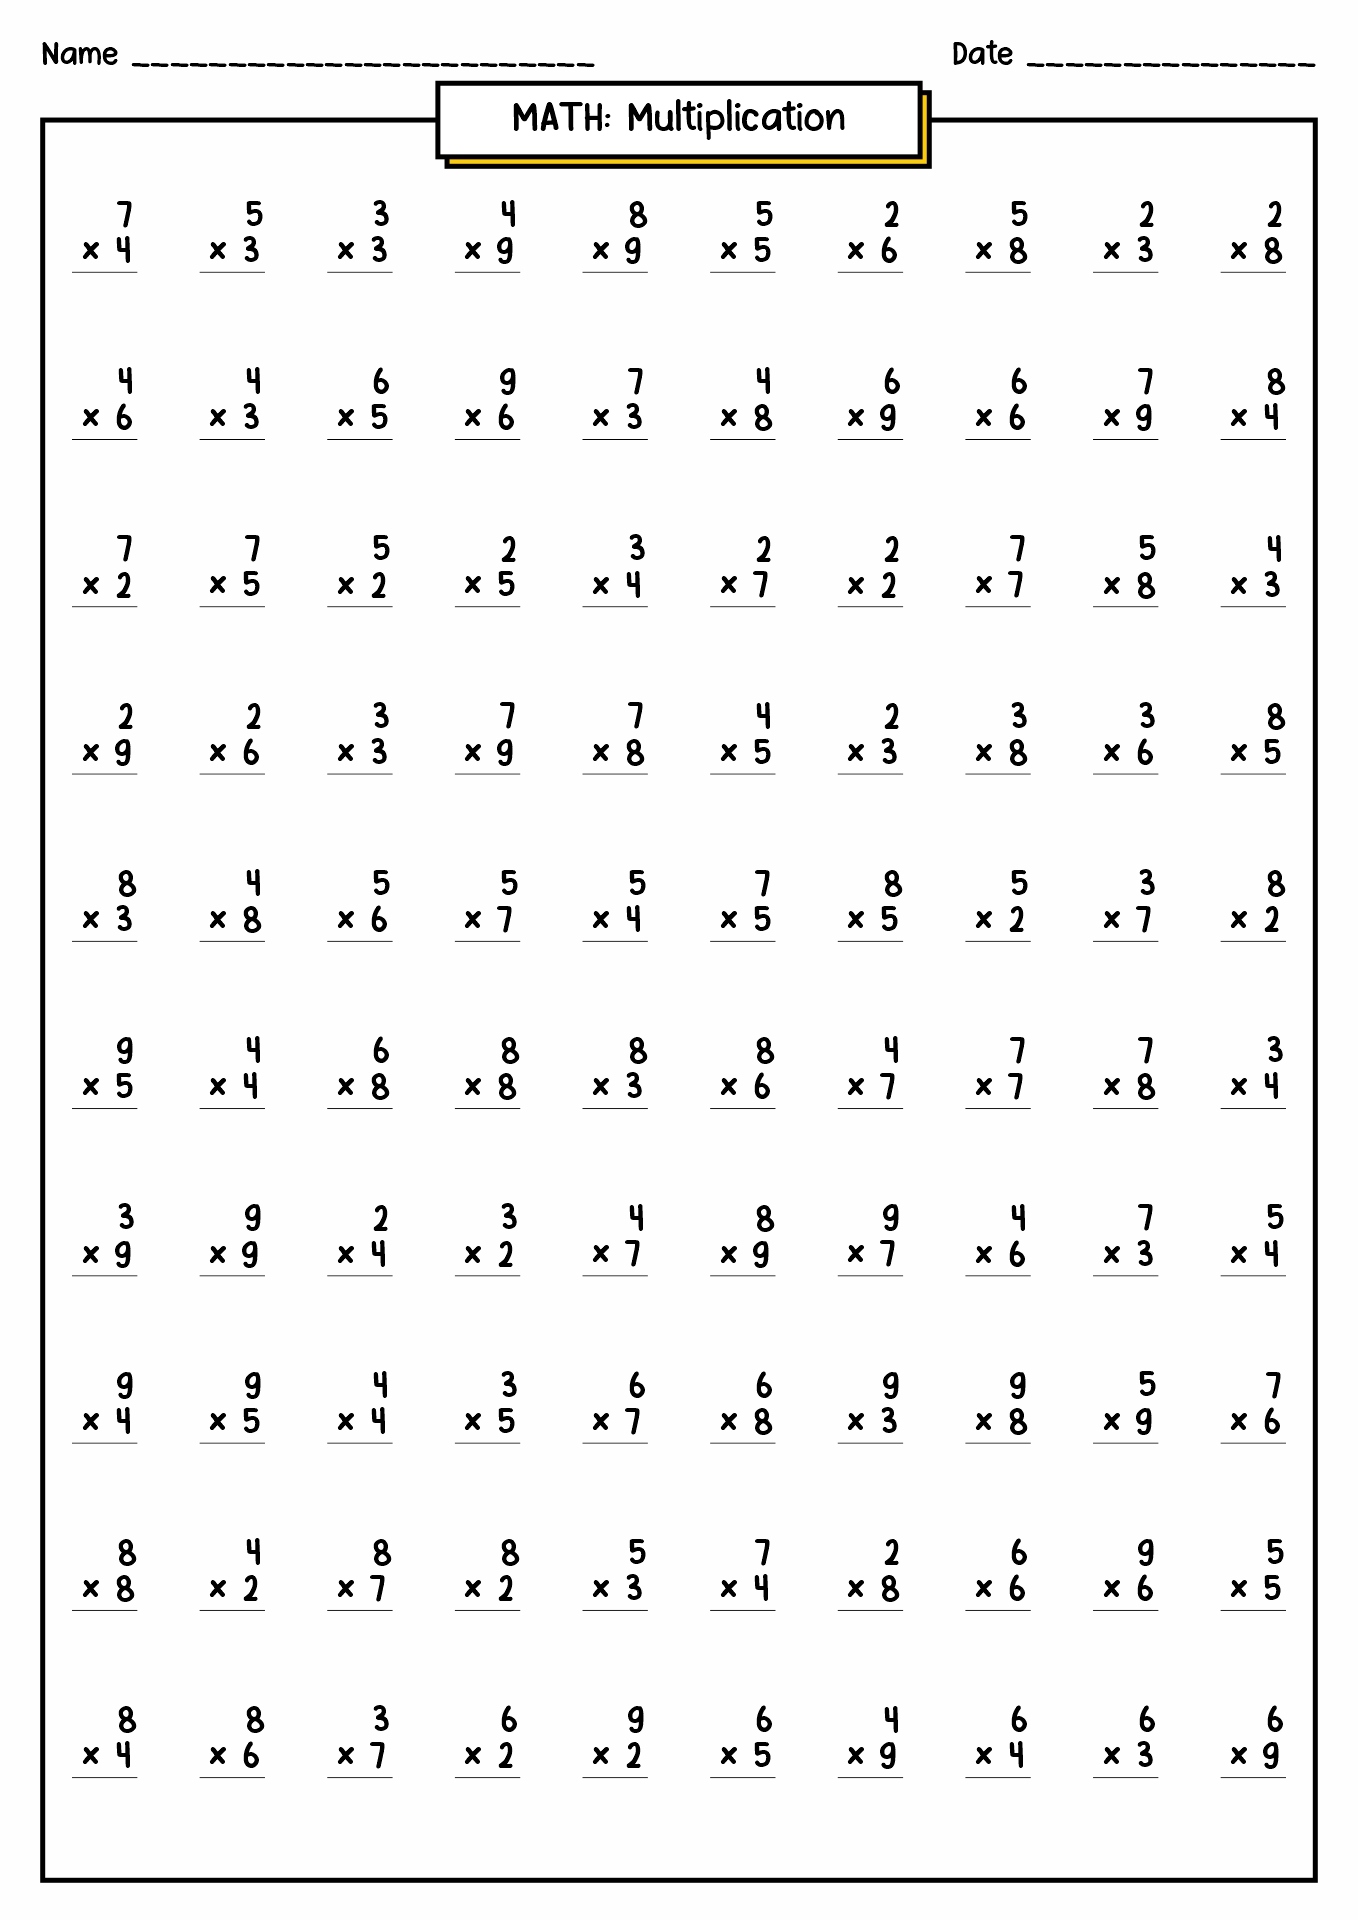 Math Problems Multiplication Worksheets Image